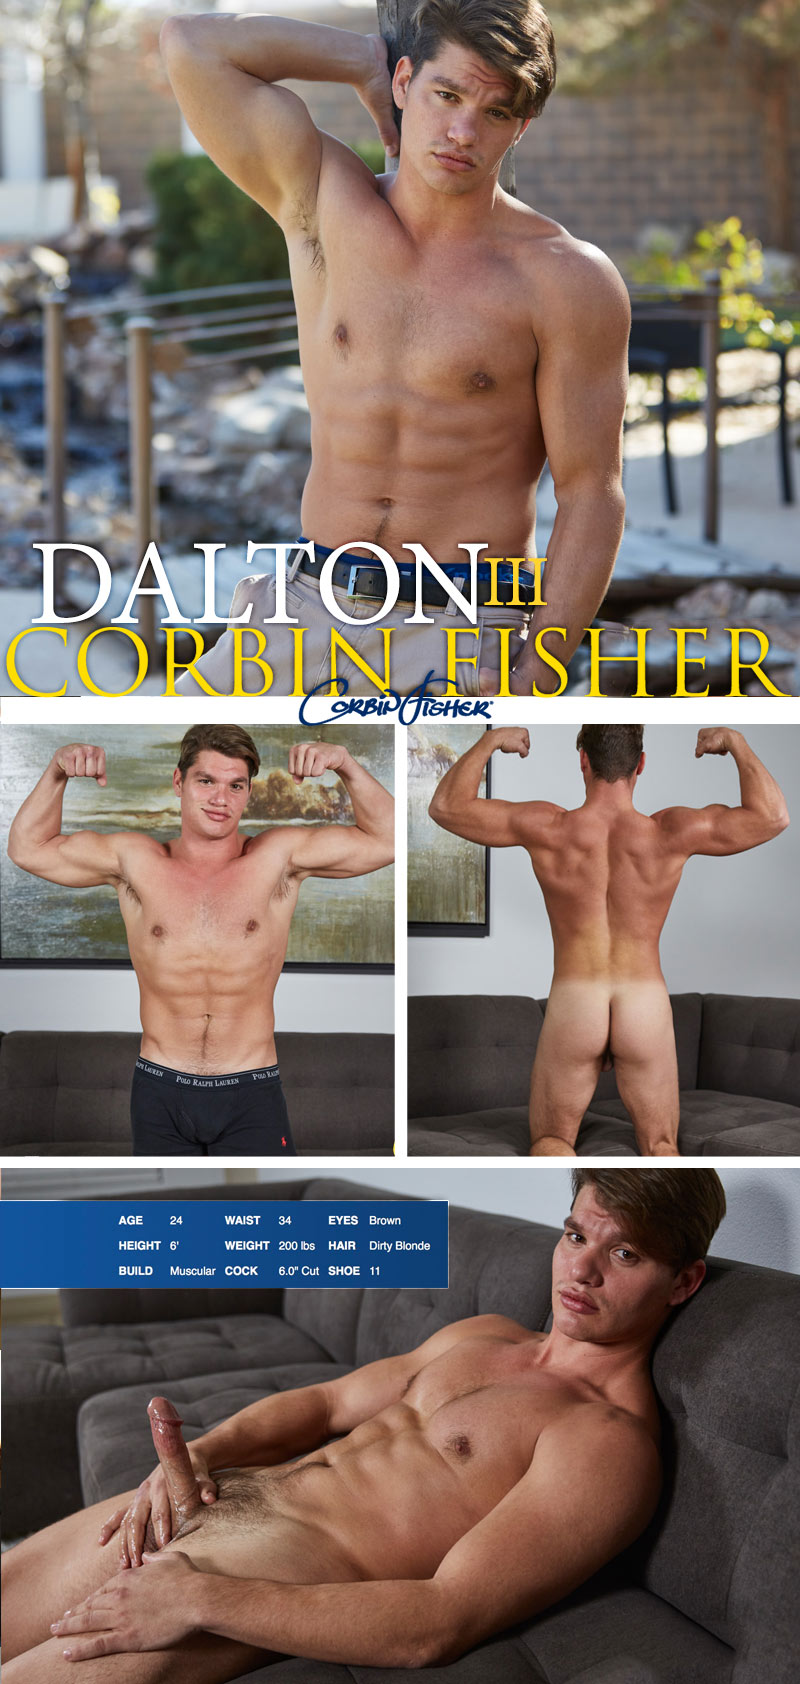 Dalton at CorbinFisher